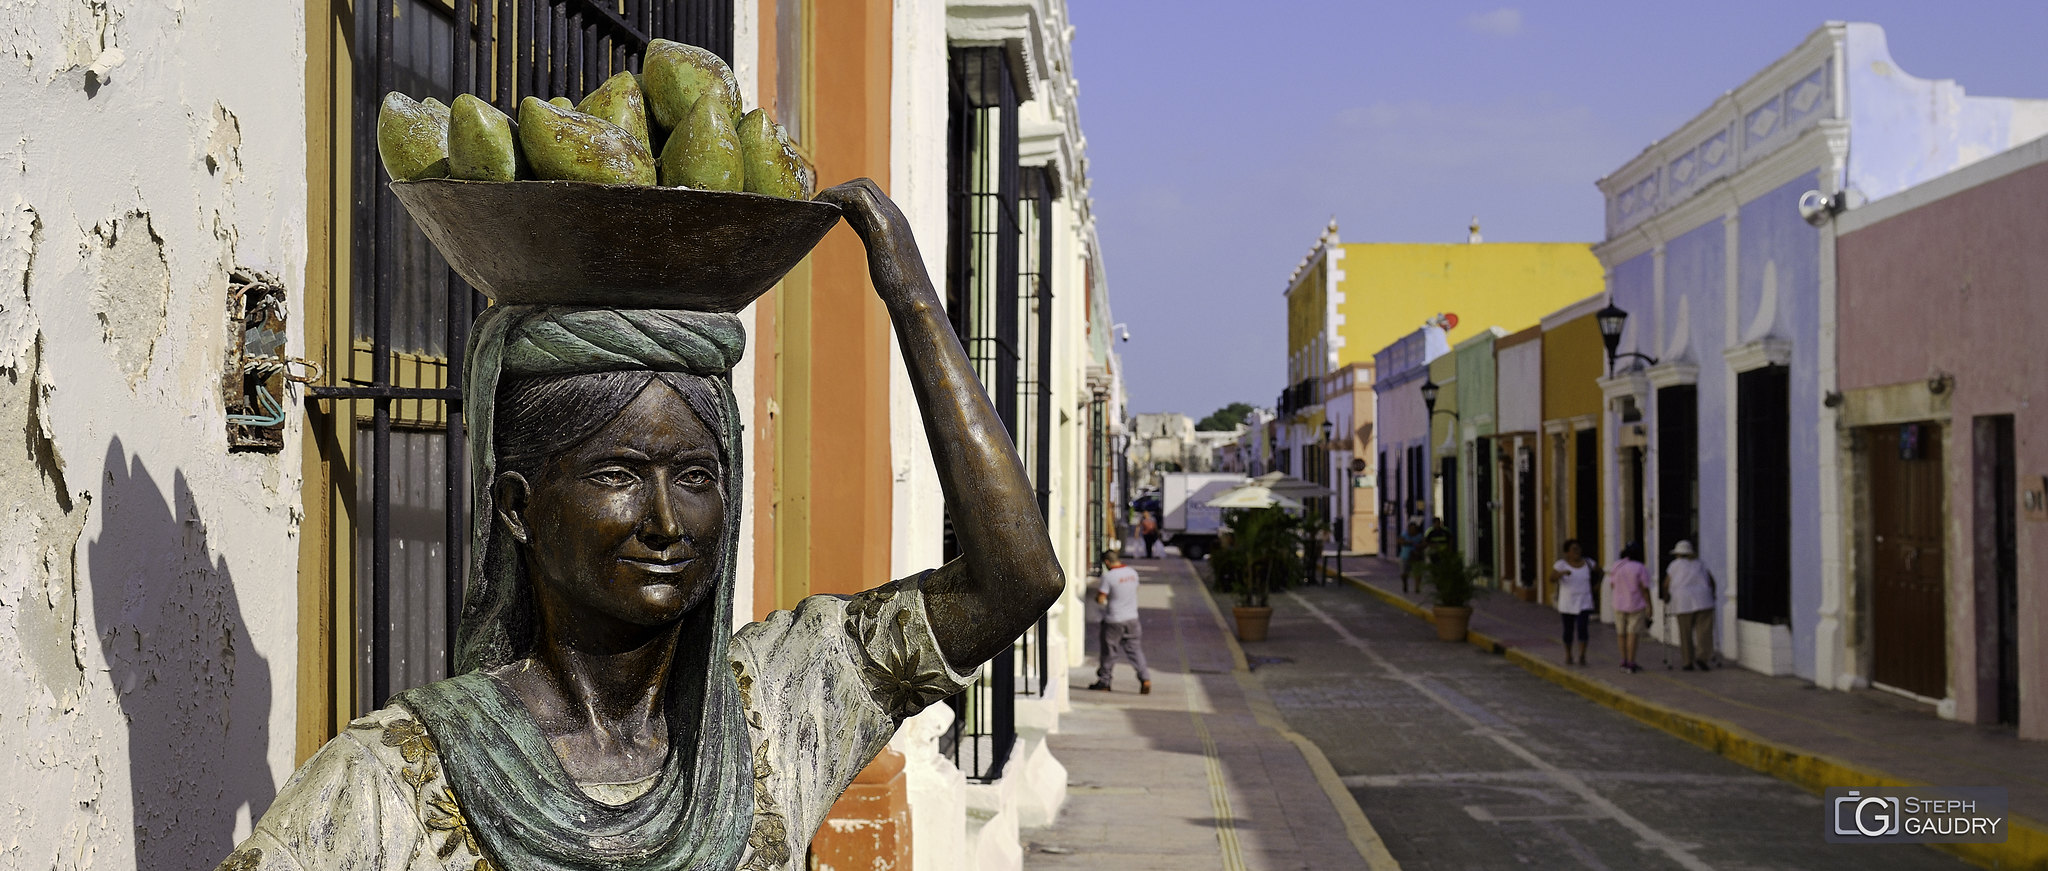 Campeche - Statue de femme avec panier de fruits [Click to start slideshow]